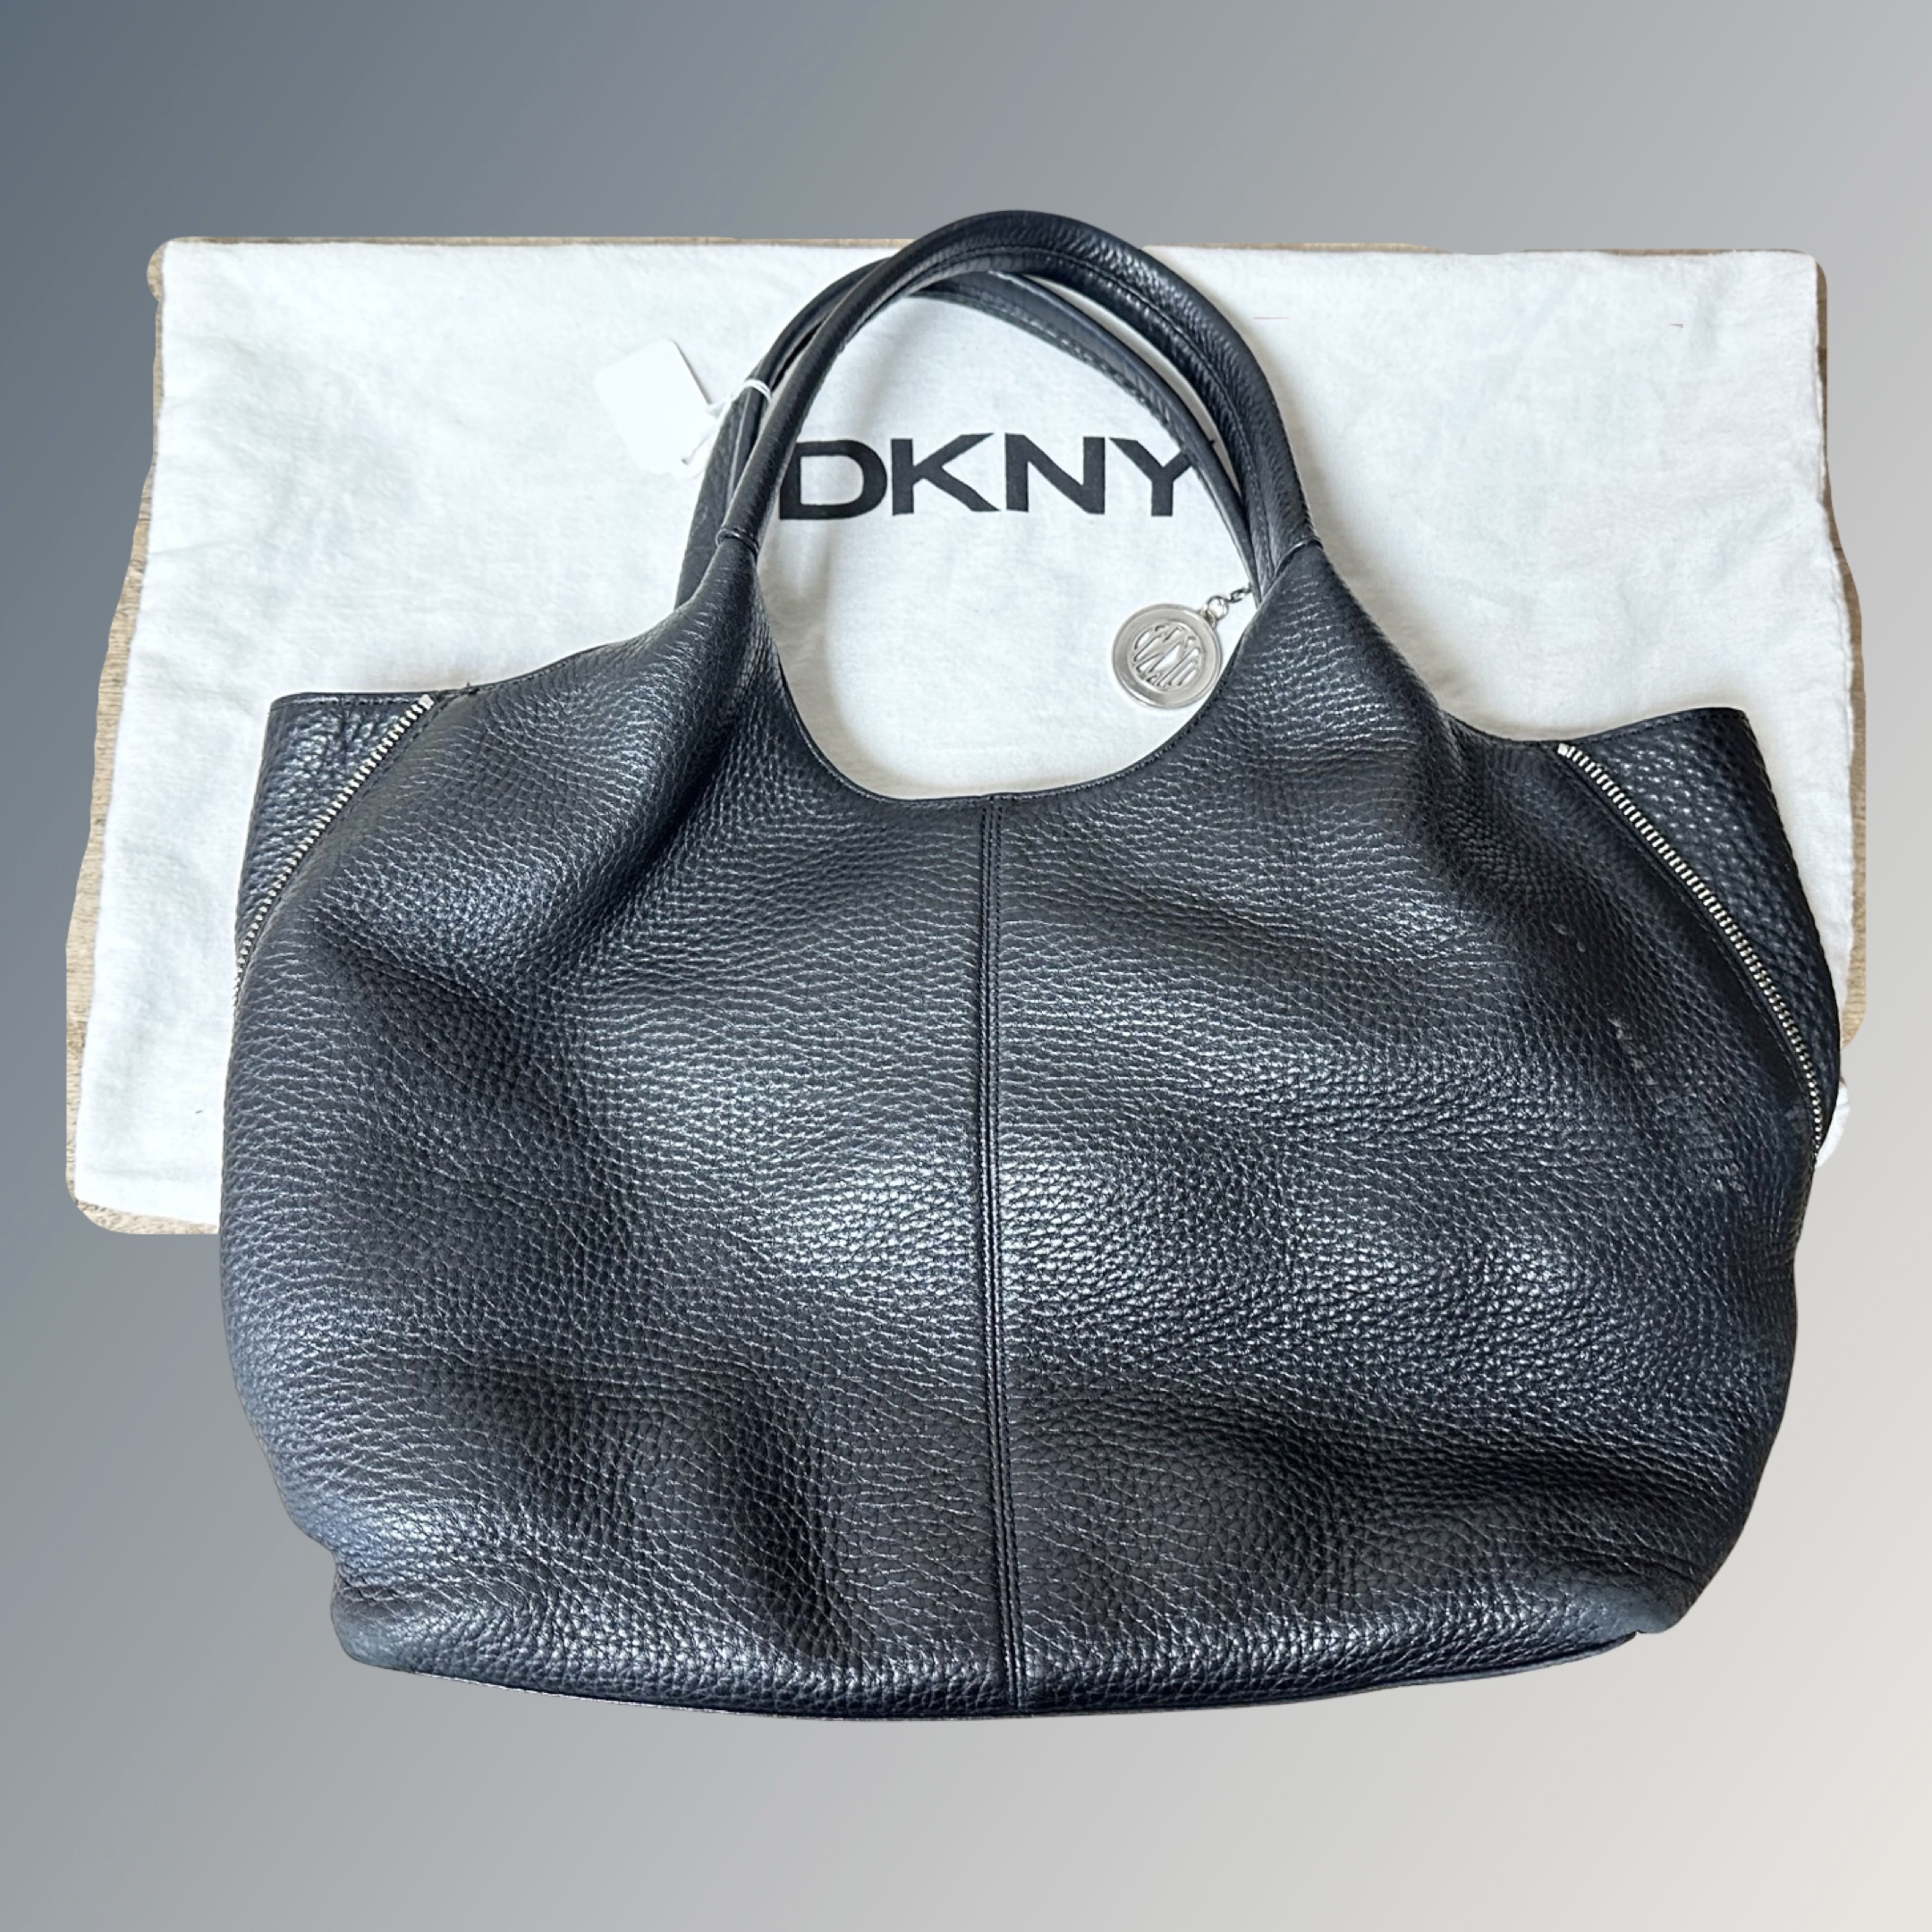 A DNKY black leather tote bag, 30 cm x 30 cm 15 cm,